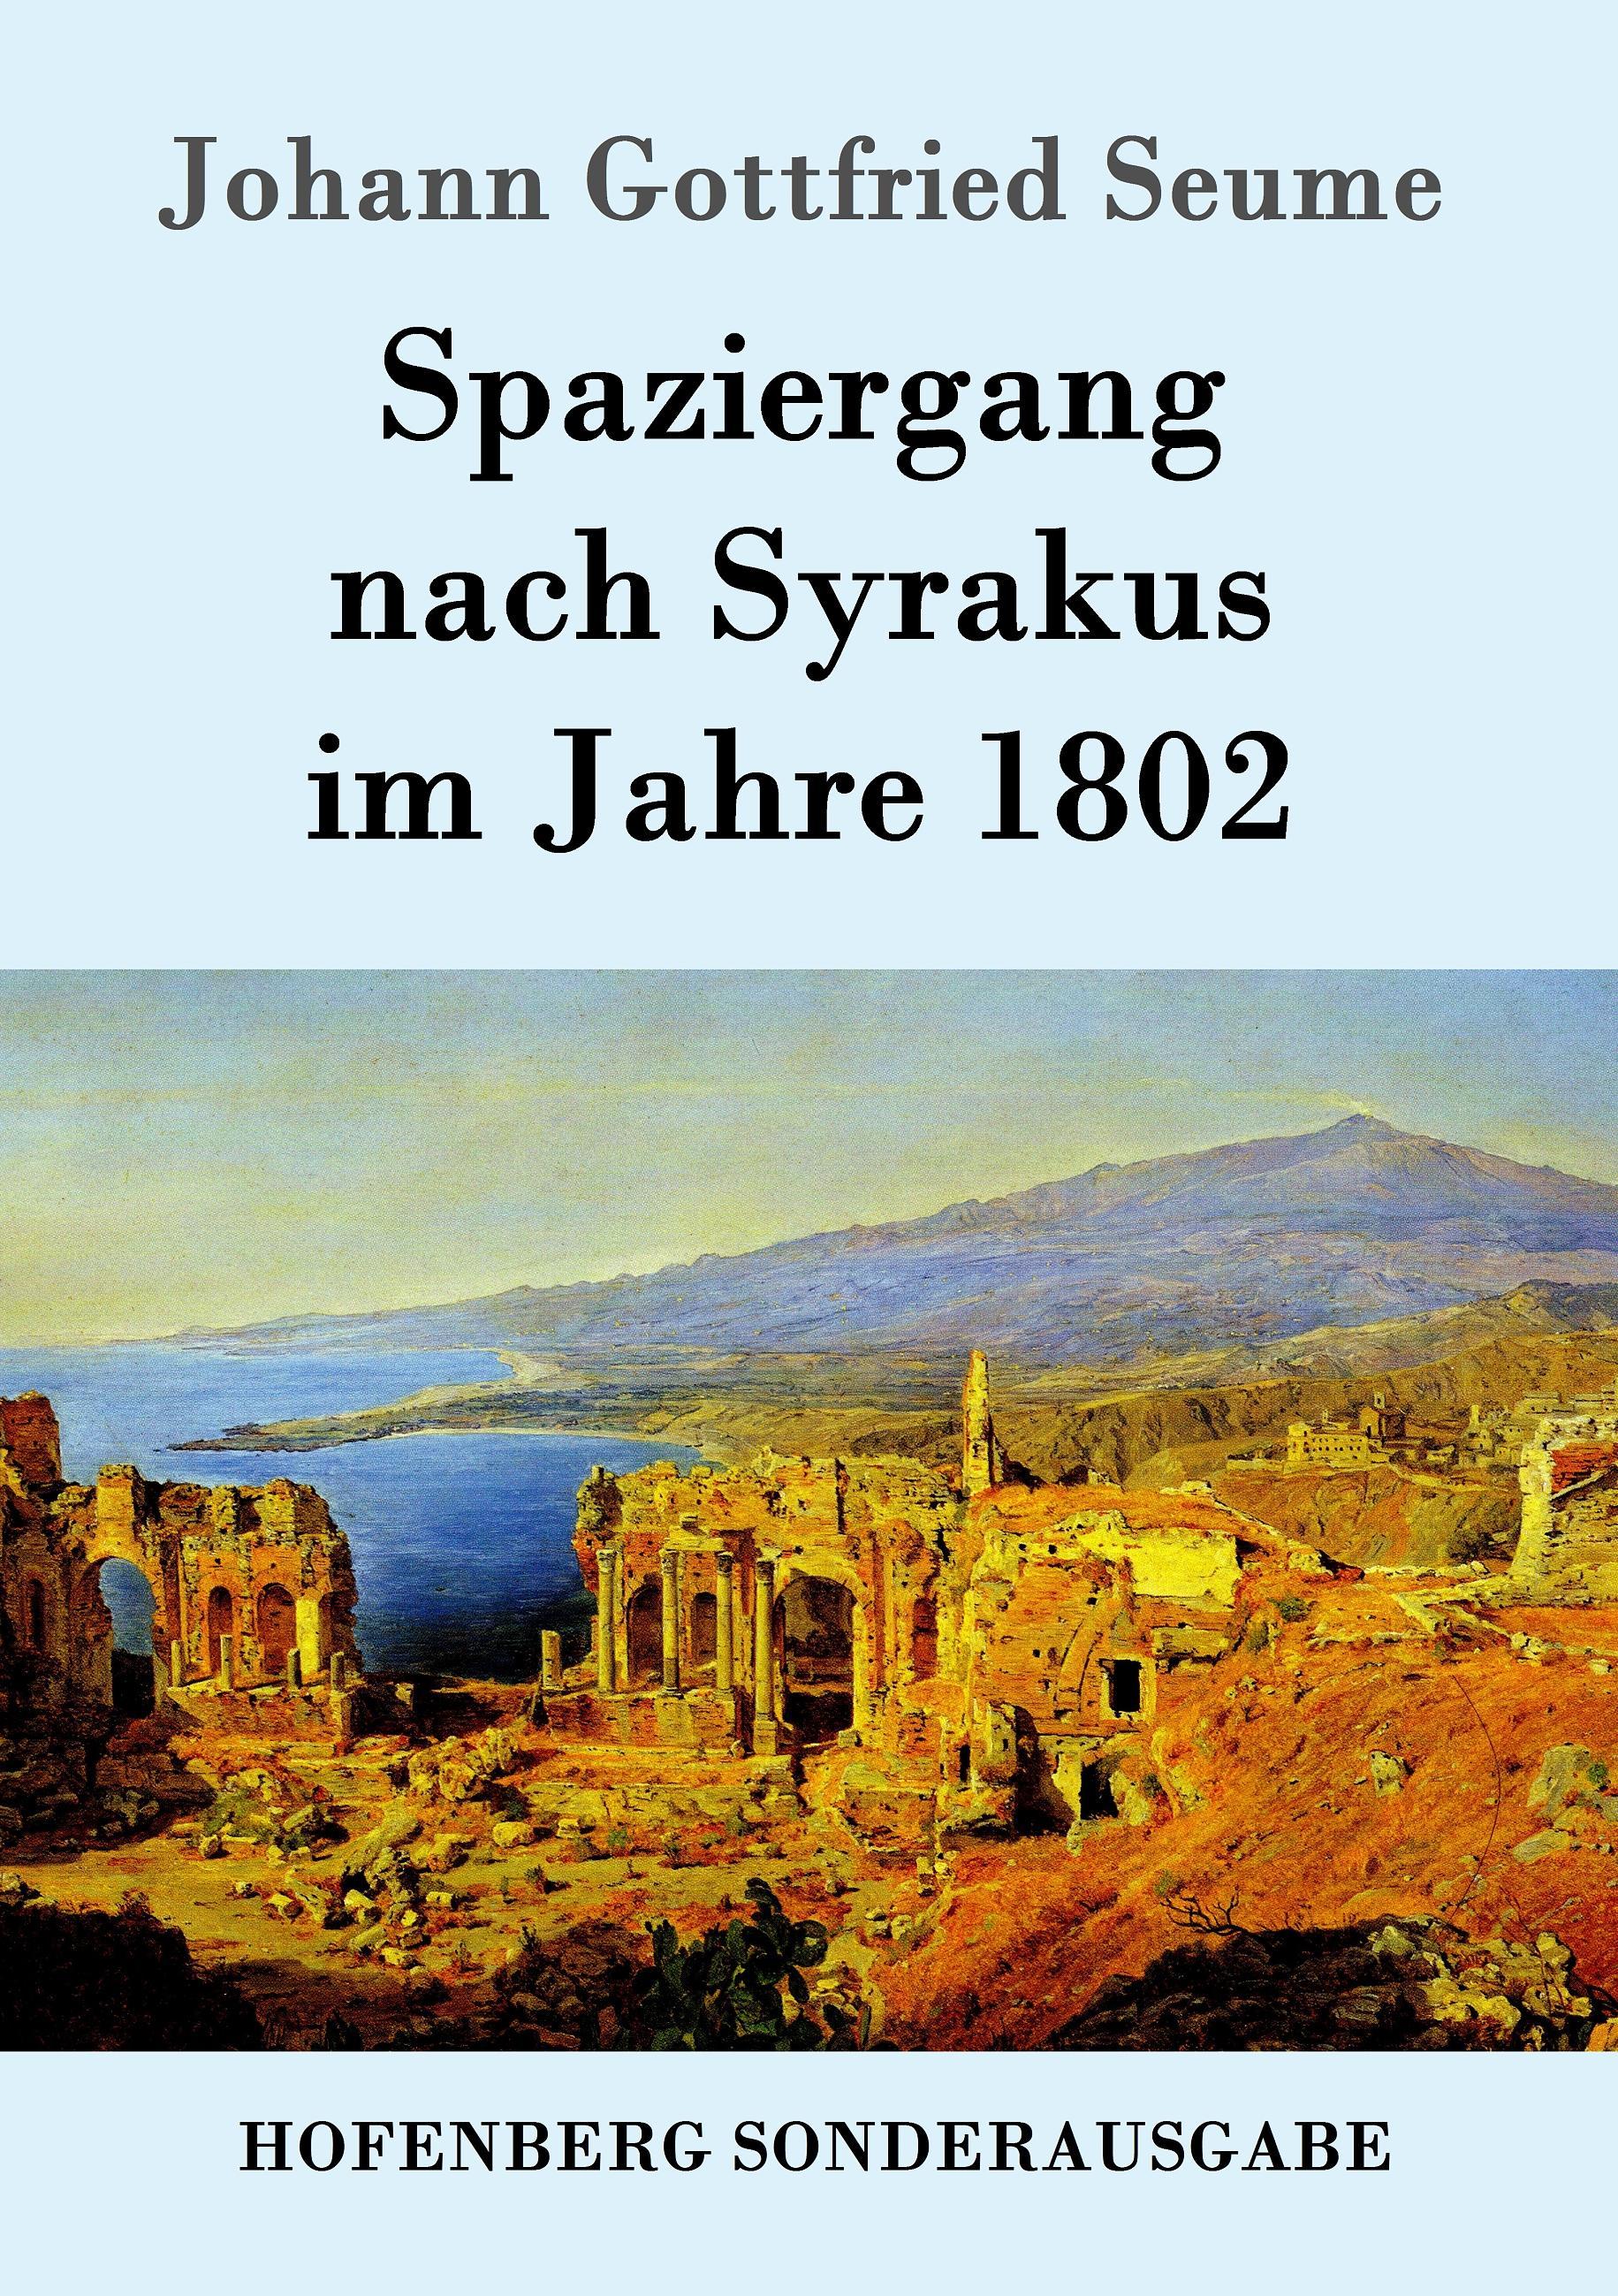 Spaziergang nach Syrakus im Jahre 1802 Johann Gottfried Seume Author